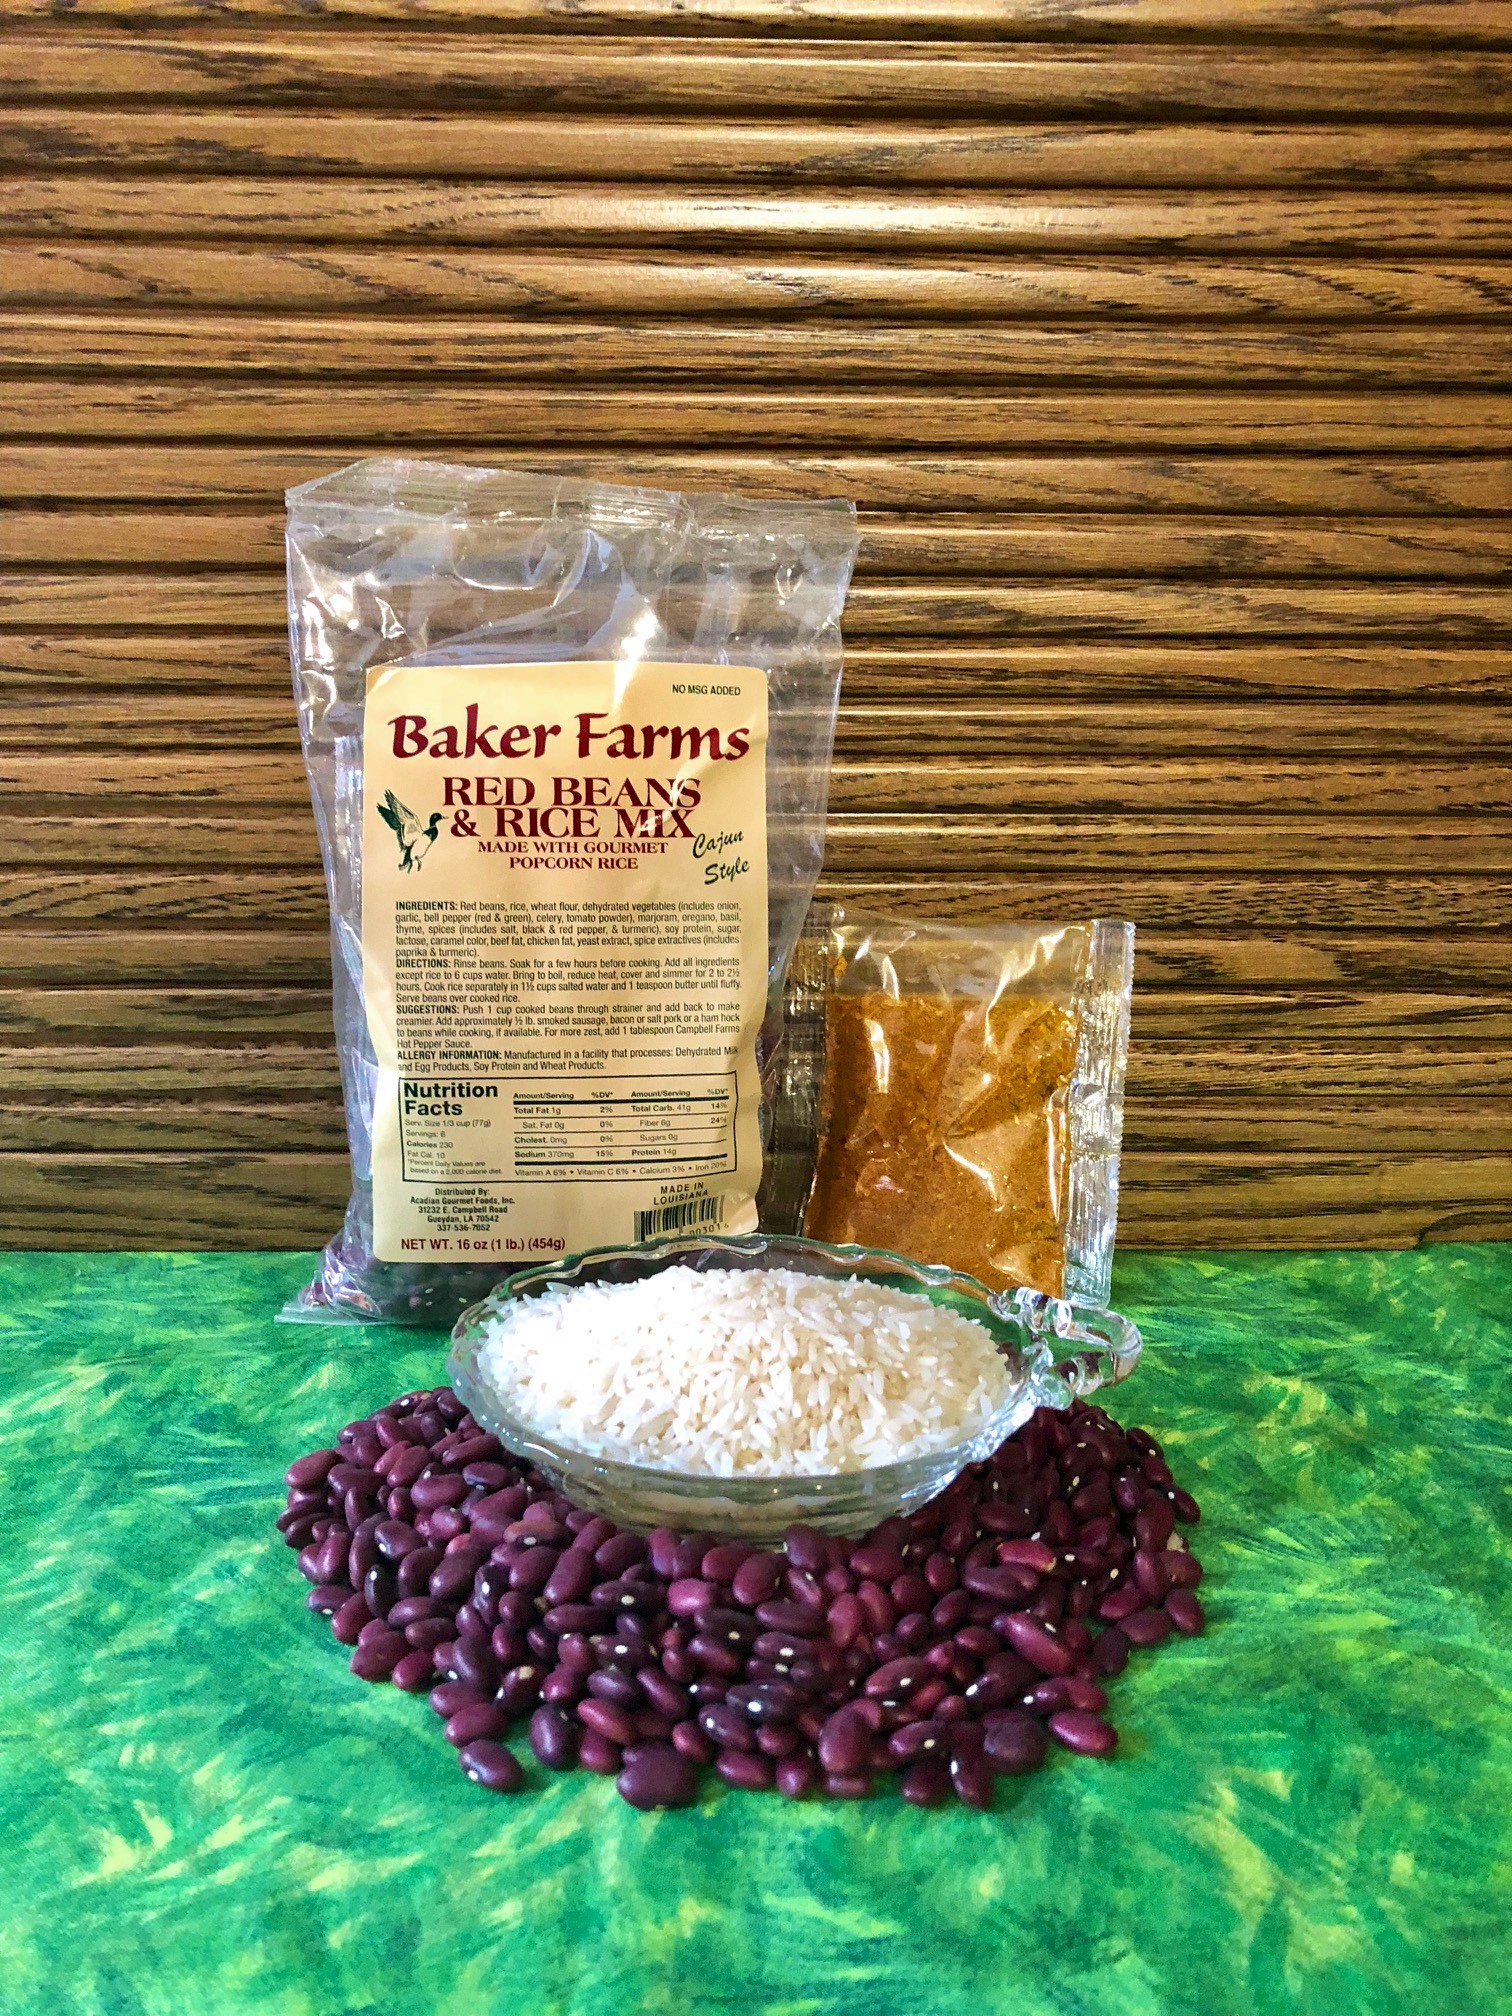 Baker Farms, Gourmet Louisiana Popcorn Rice, 5 lb Sack